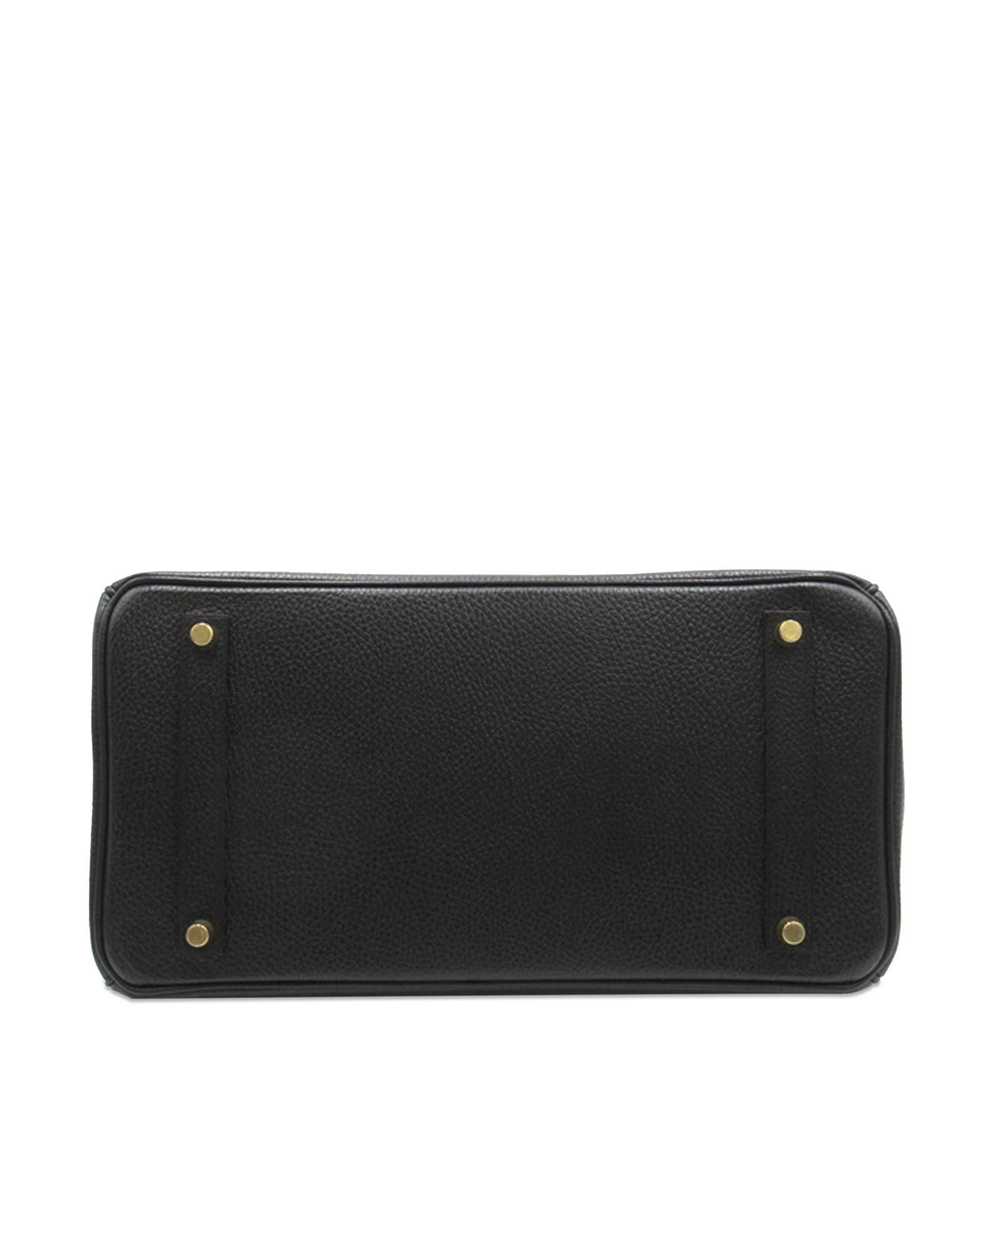 Hermes Ardennes Leather Birkin Handbag - Noir - image 4